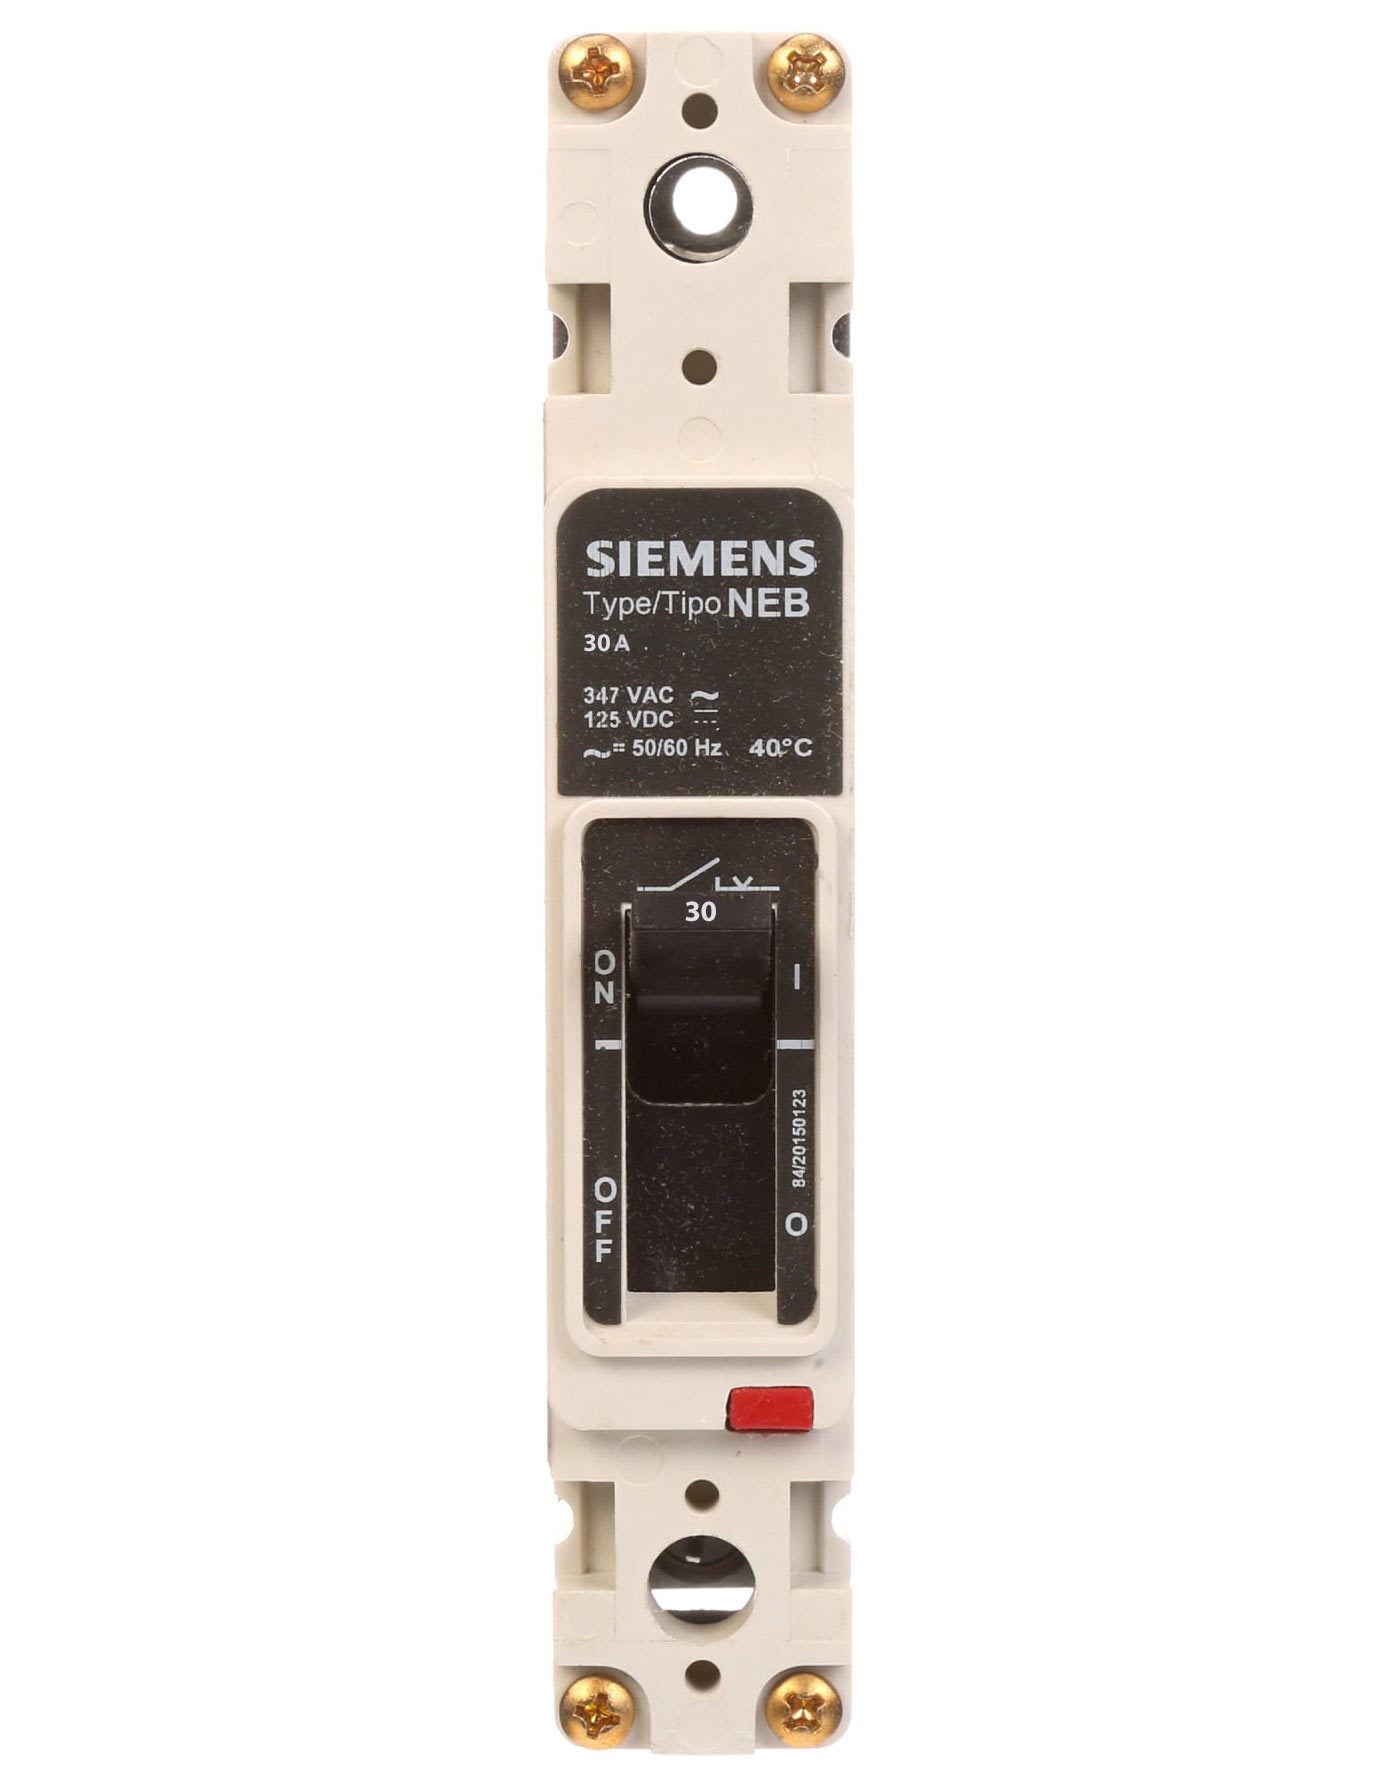 NEB1B050B - Siemens - 50 Amp Molded Case Circuit Breaker